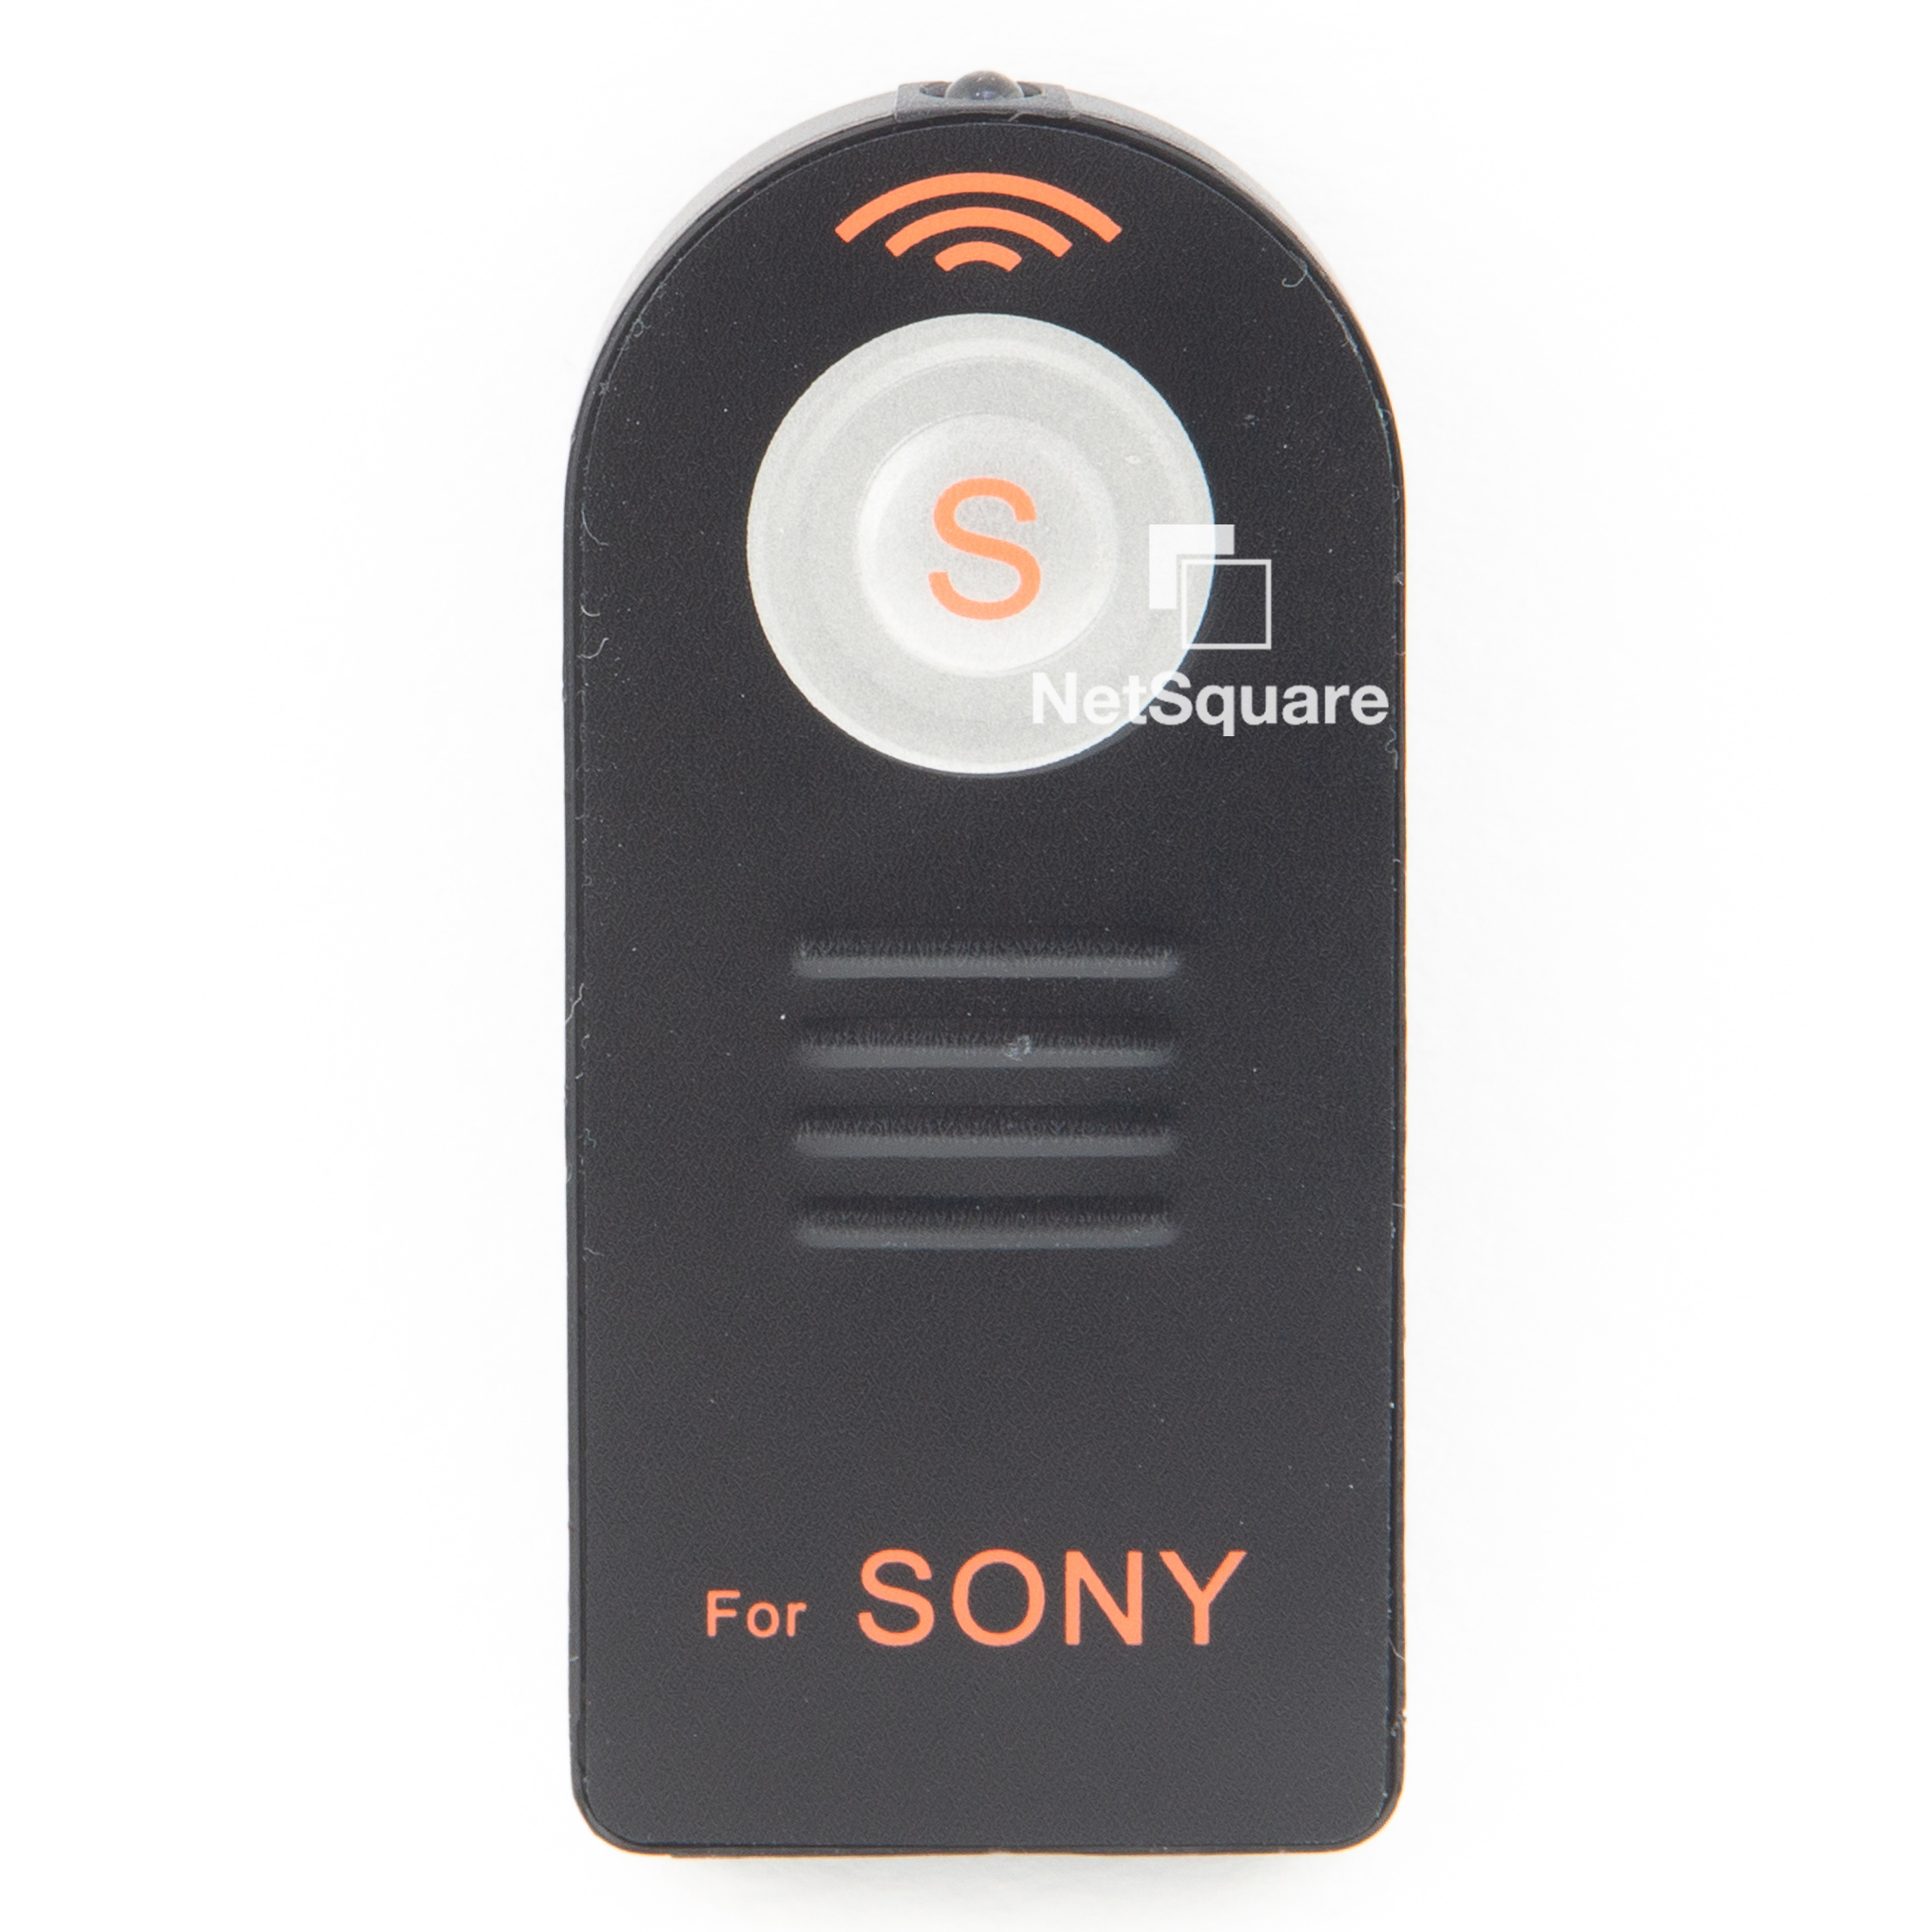 Wireless Remote for Sony Camera IR Infrared รีโมทกล้องโซนี่